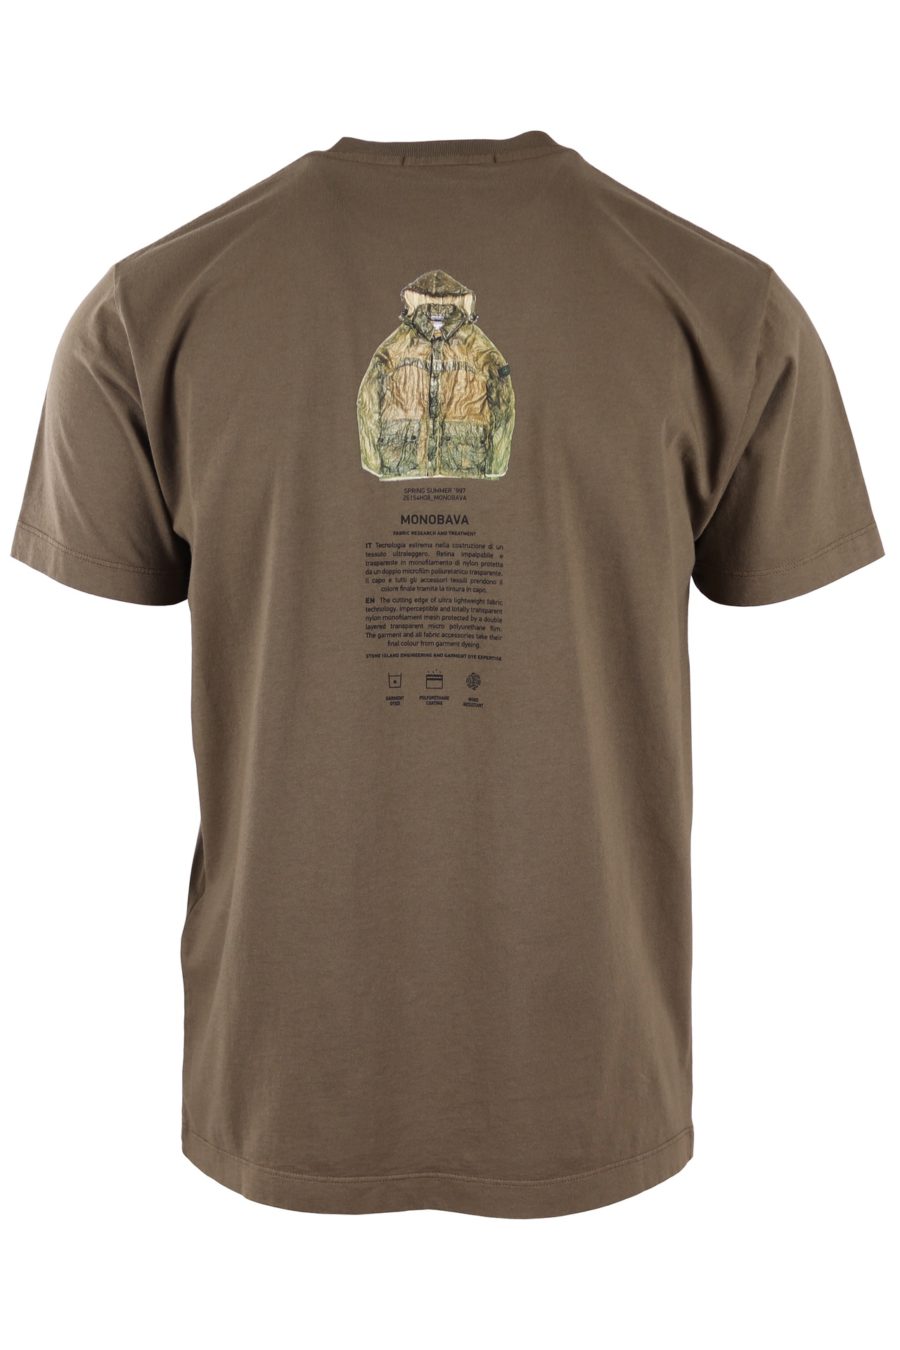 Camiseta Stone Island verde militar con logo "archivio" - e479b4f2340d93a5d2b6d33e1772abdc36ff26da